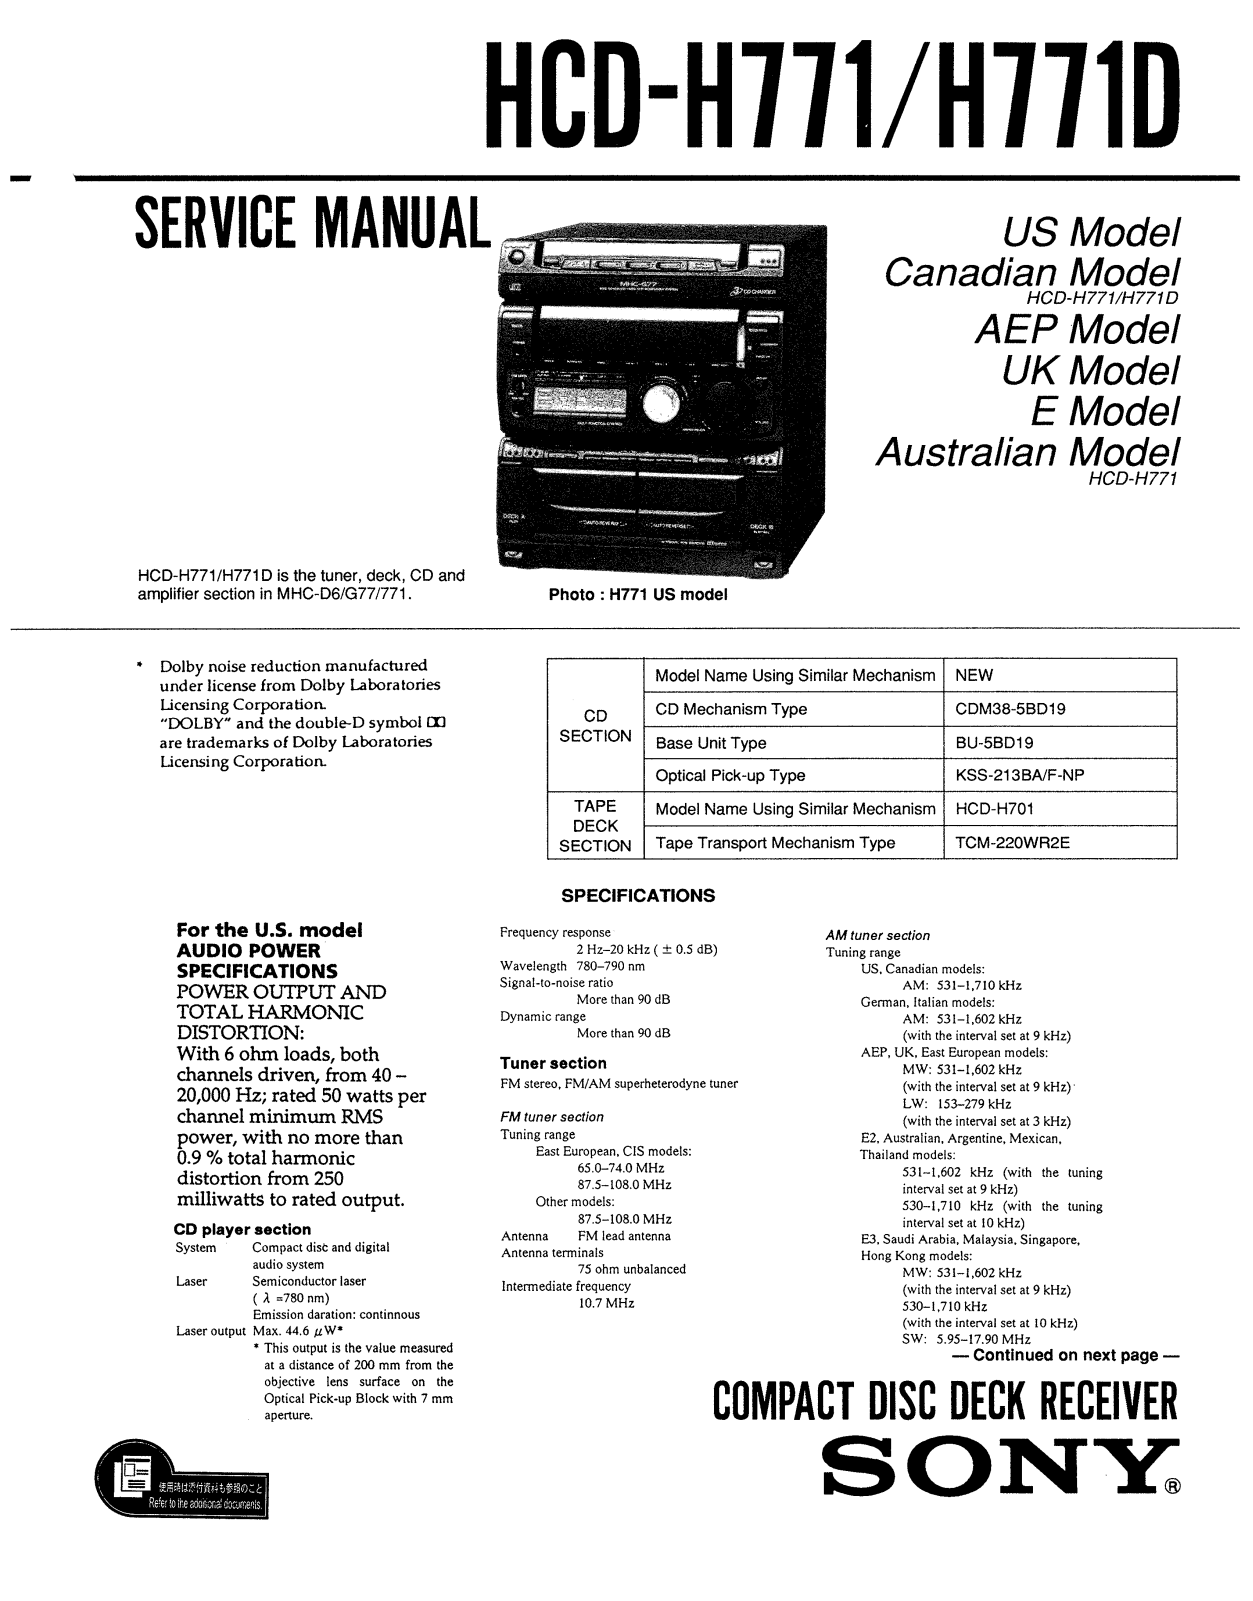 Sony HCD-H771, HCD-H771D Service Manual